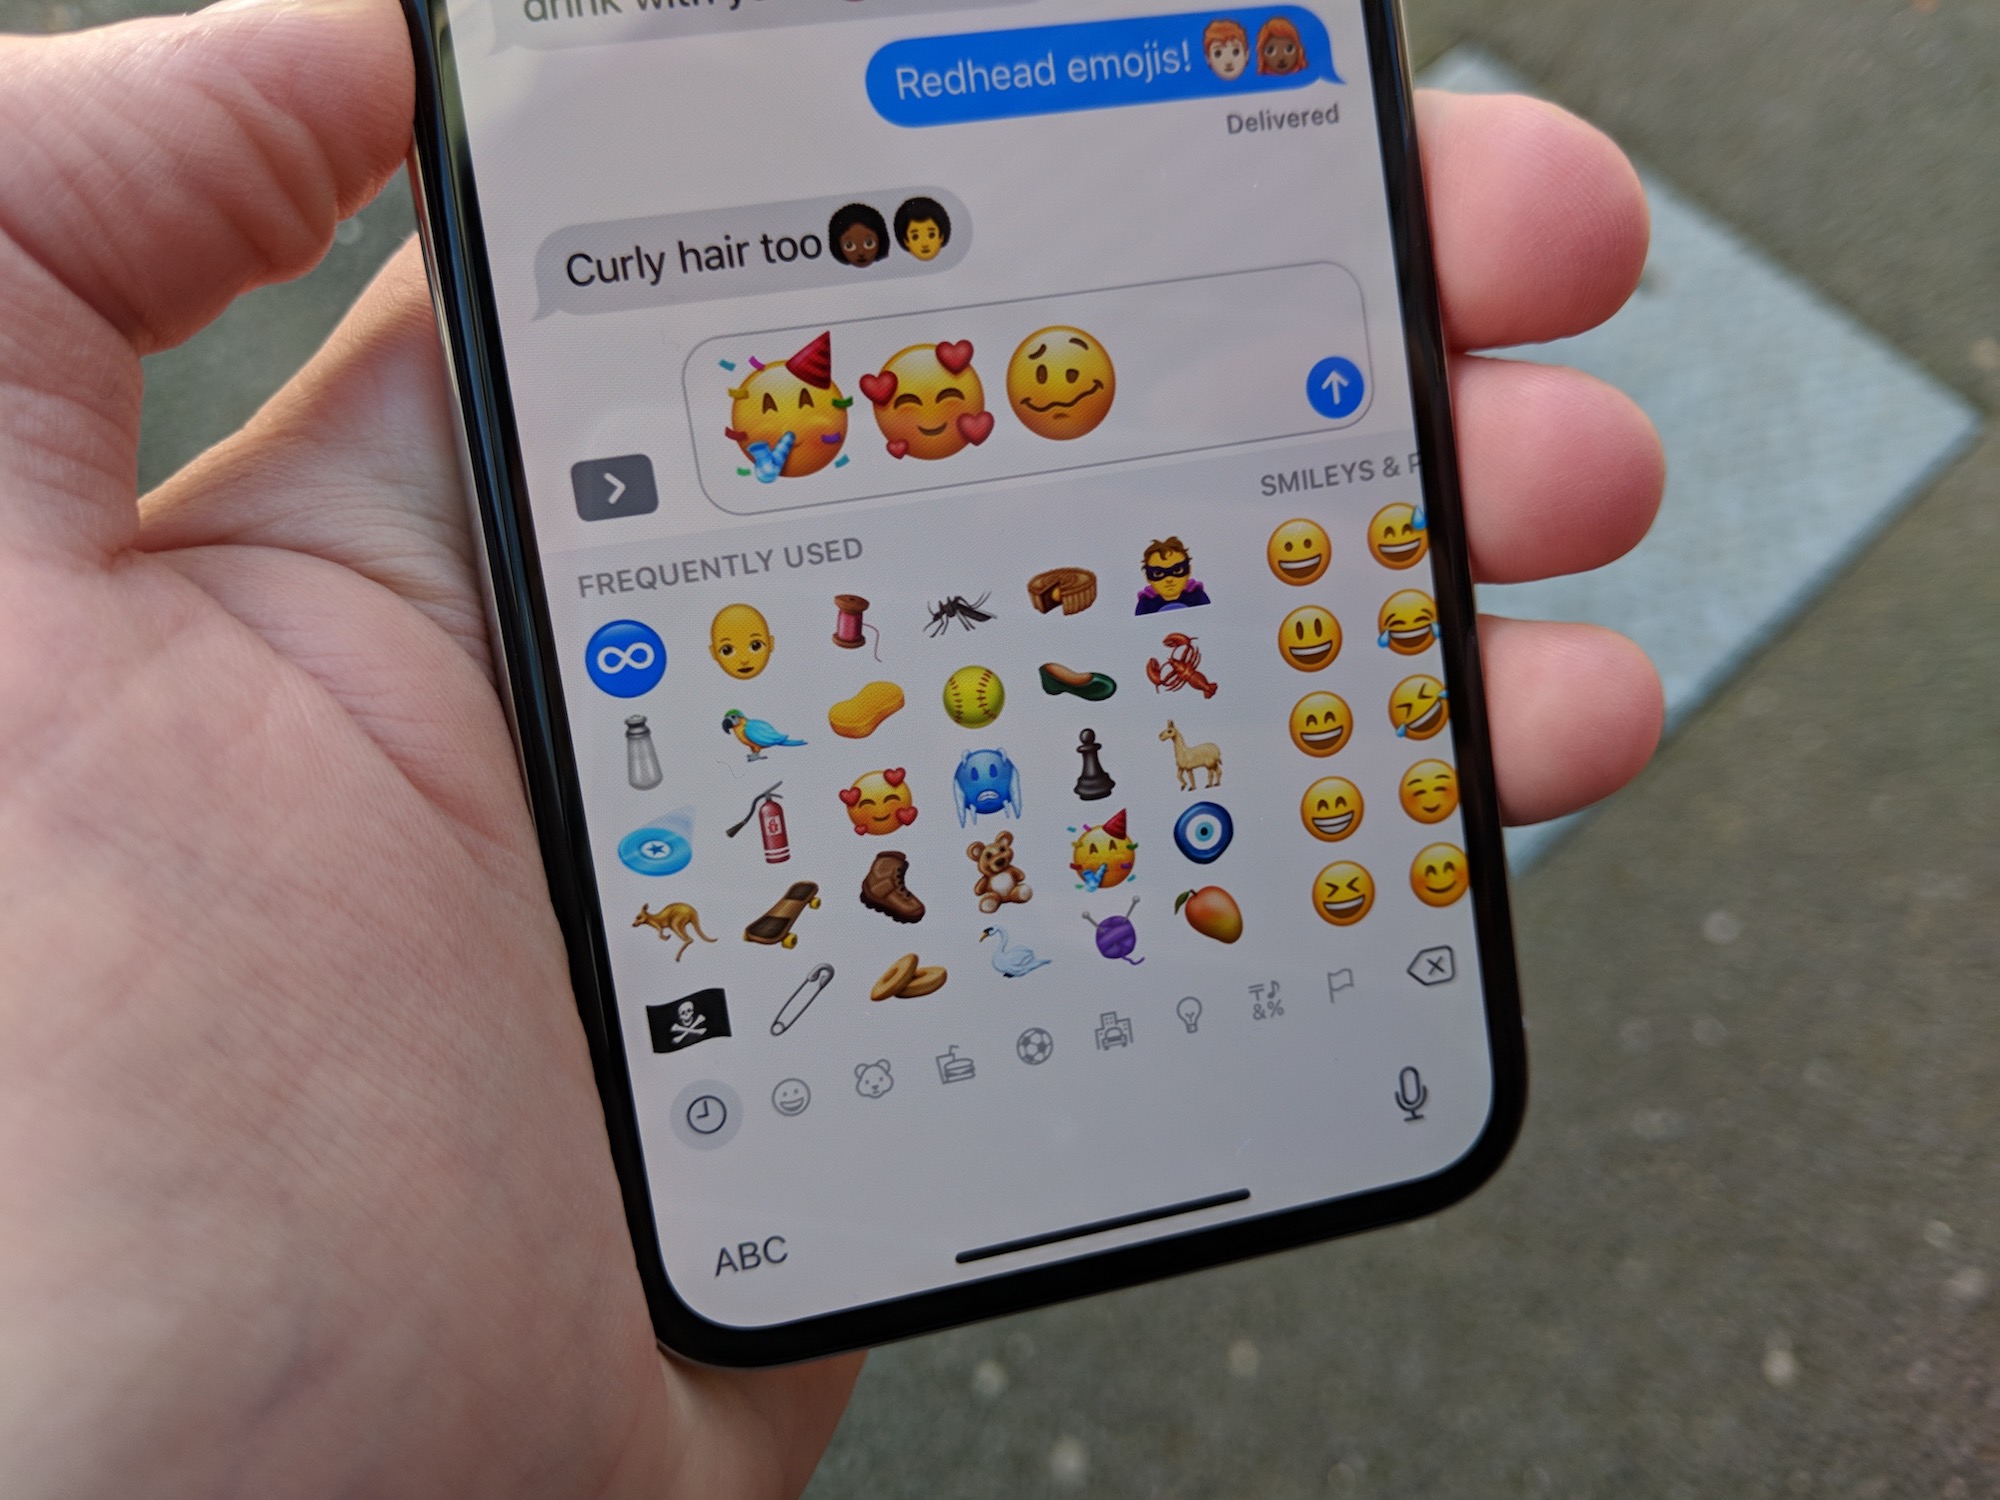 157 New Emojis In The 2018 Emoji List